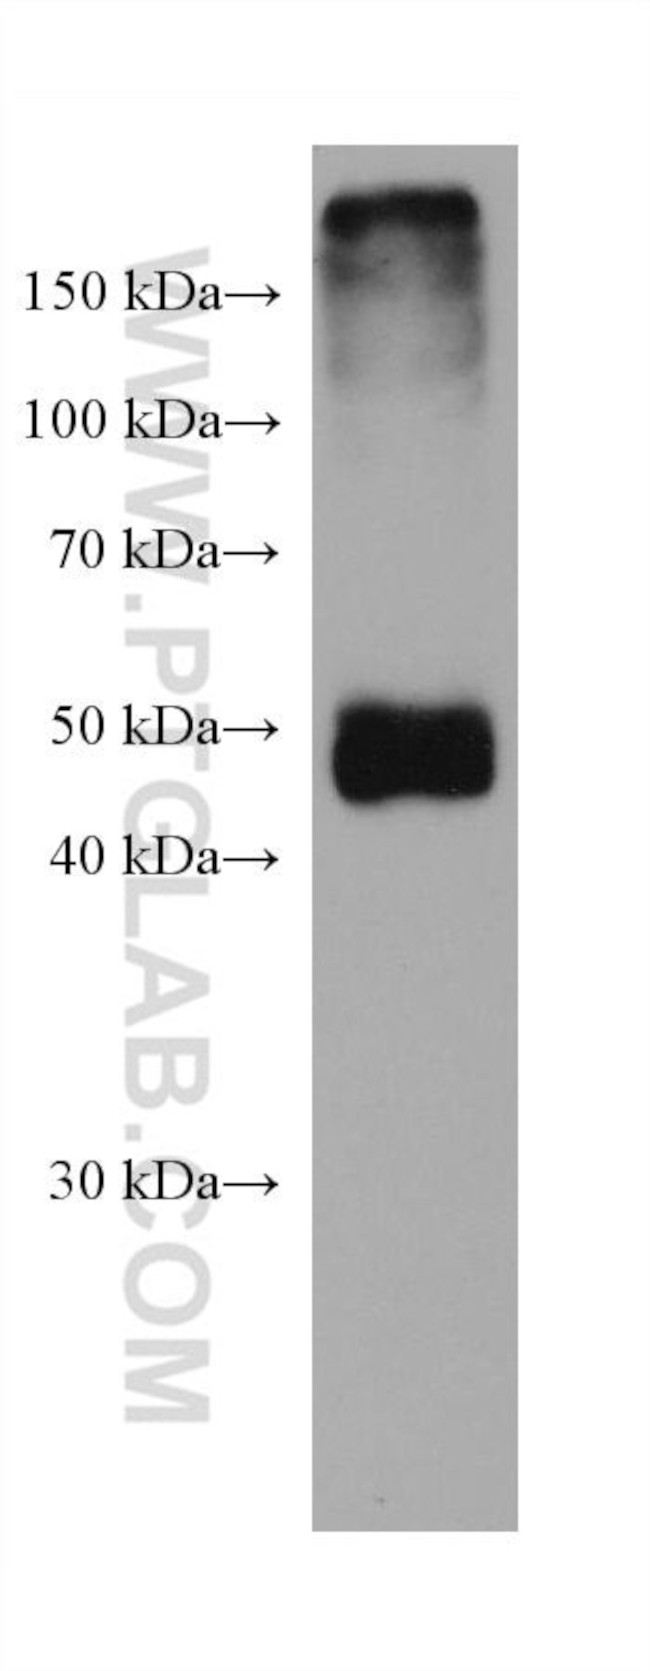 SHMT1 Antibody in Western Blot (WB)